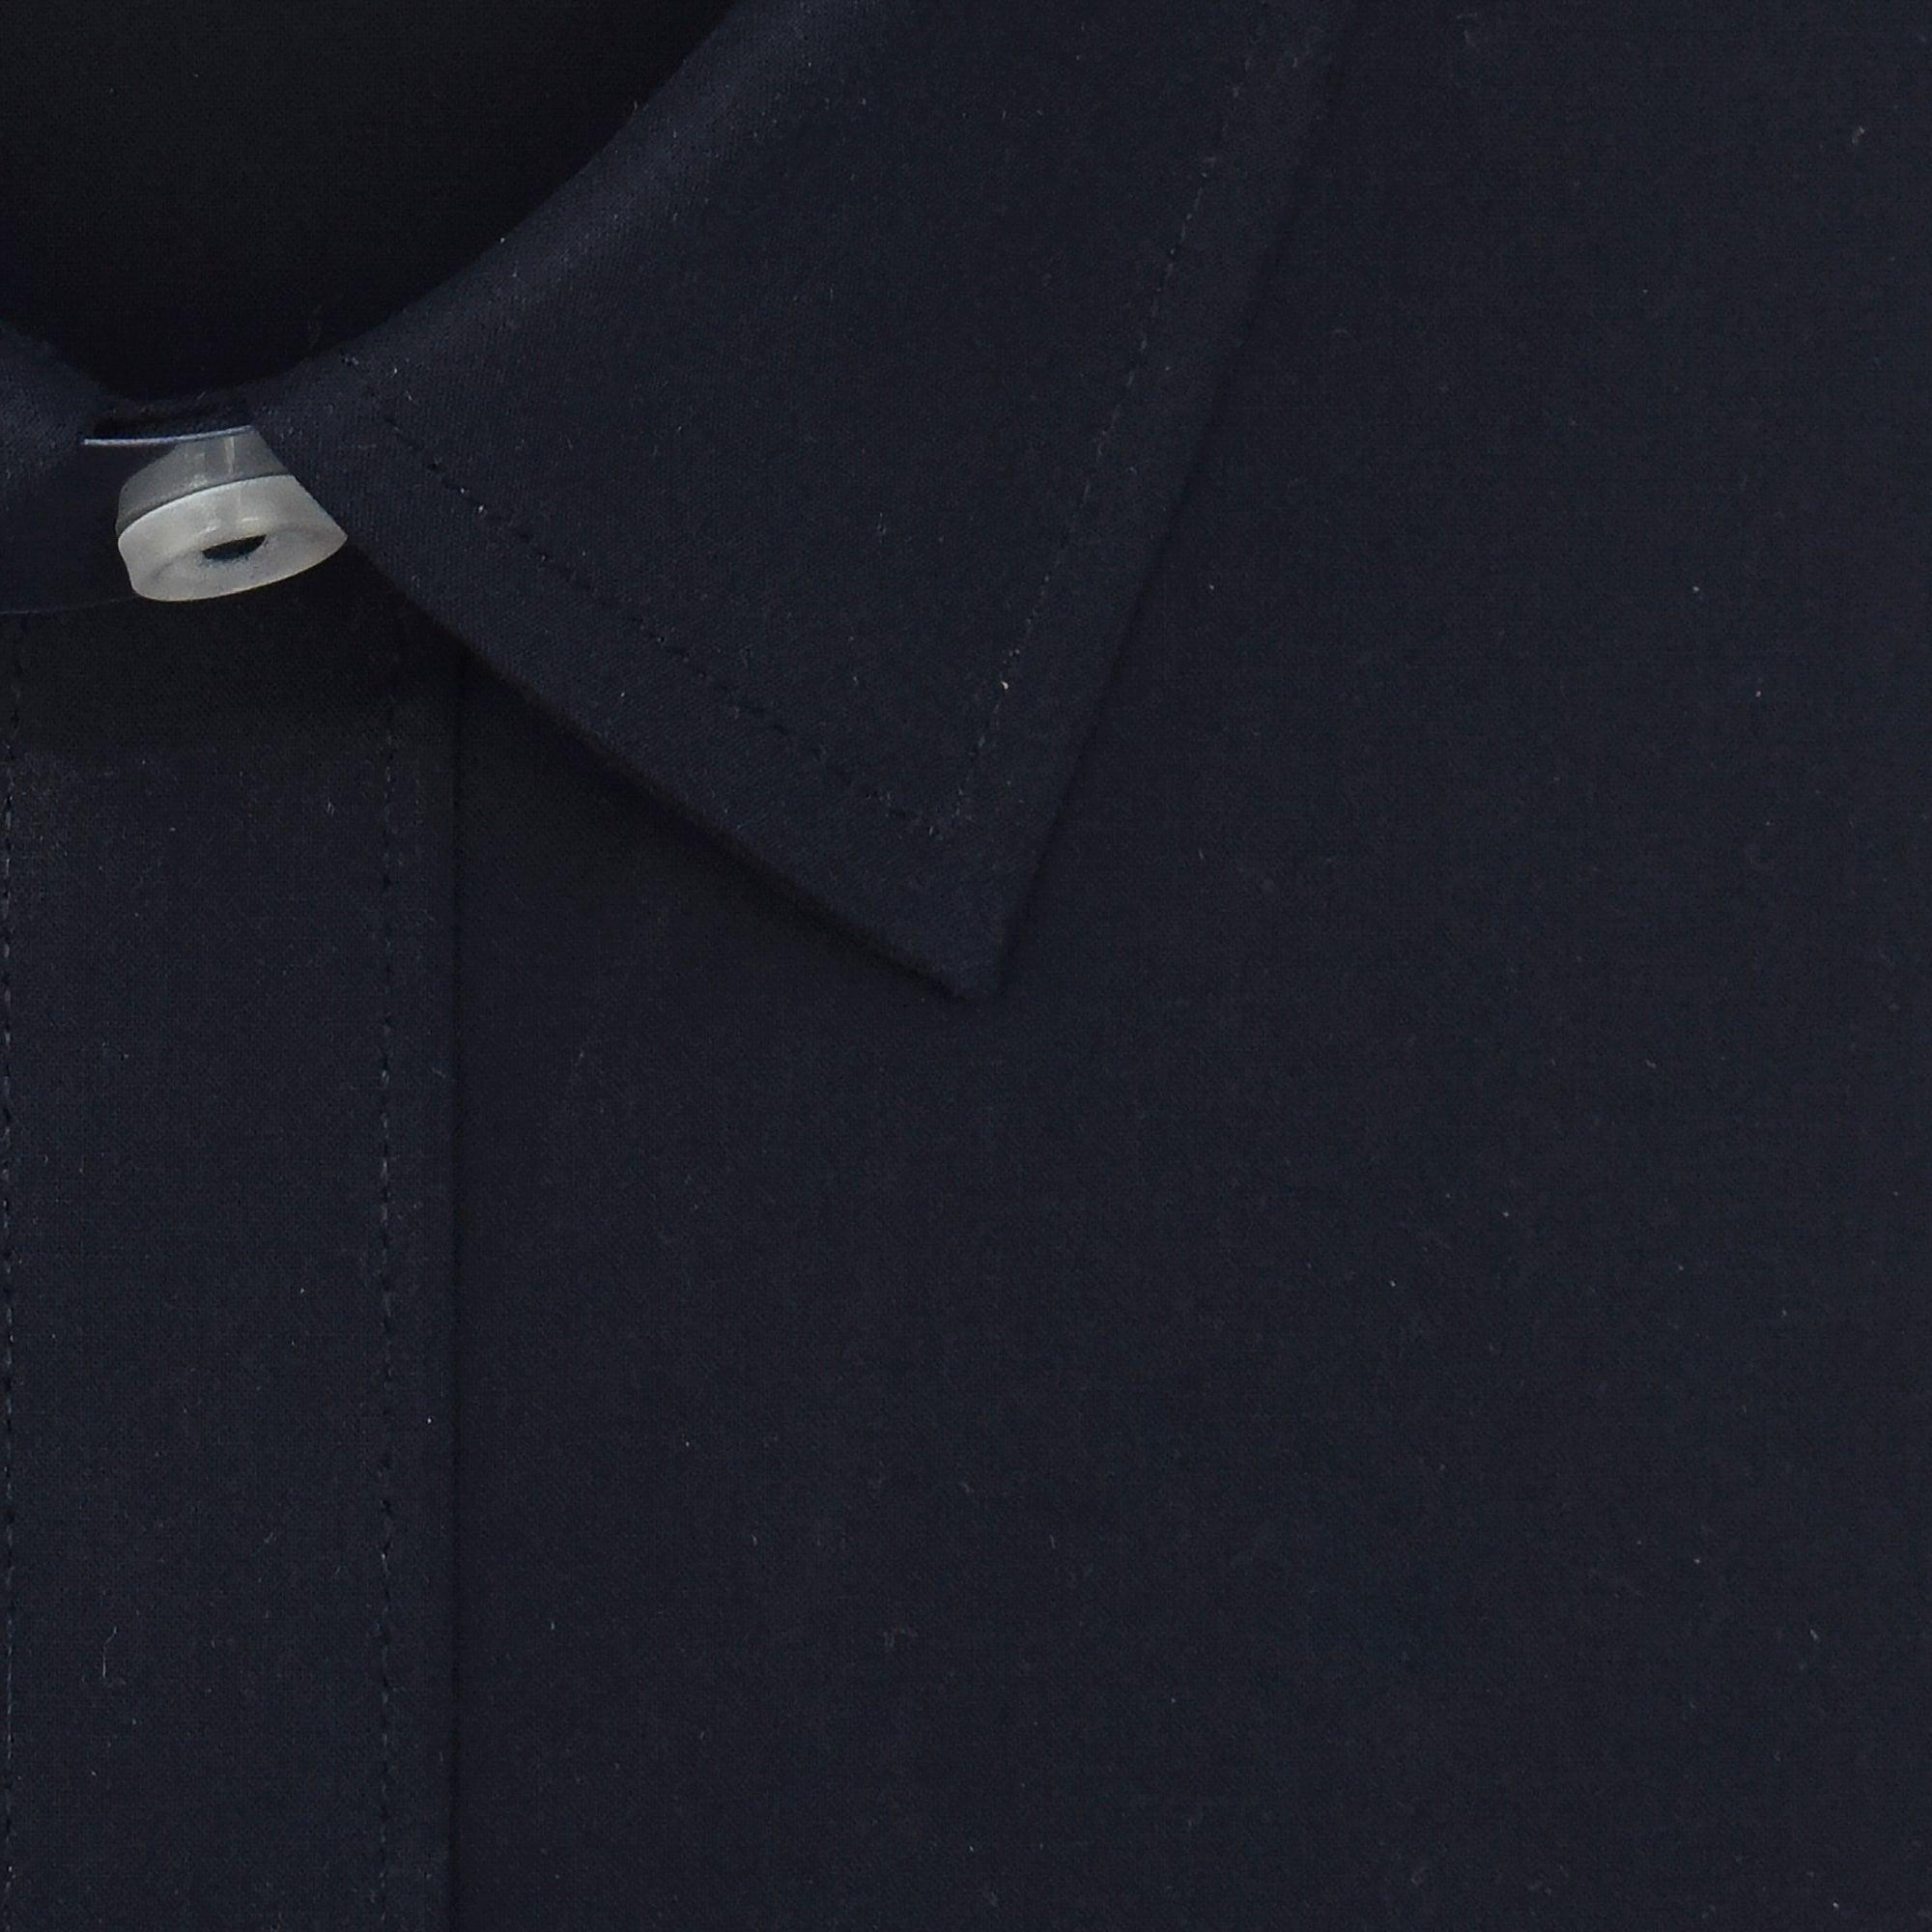 Men's 100% Cotton Plain Solid Half Sleeves Shirt (Navy)